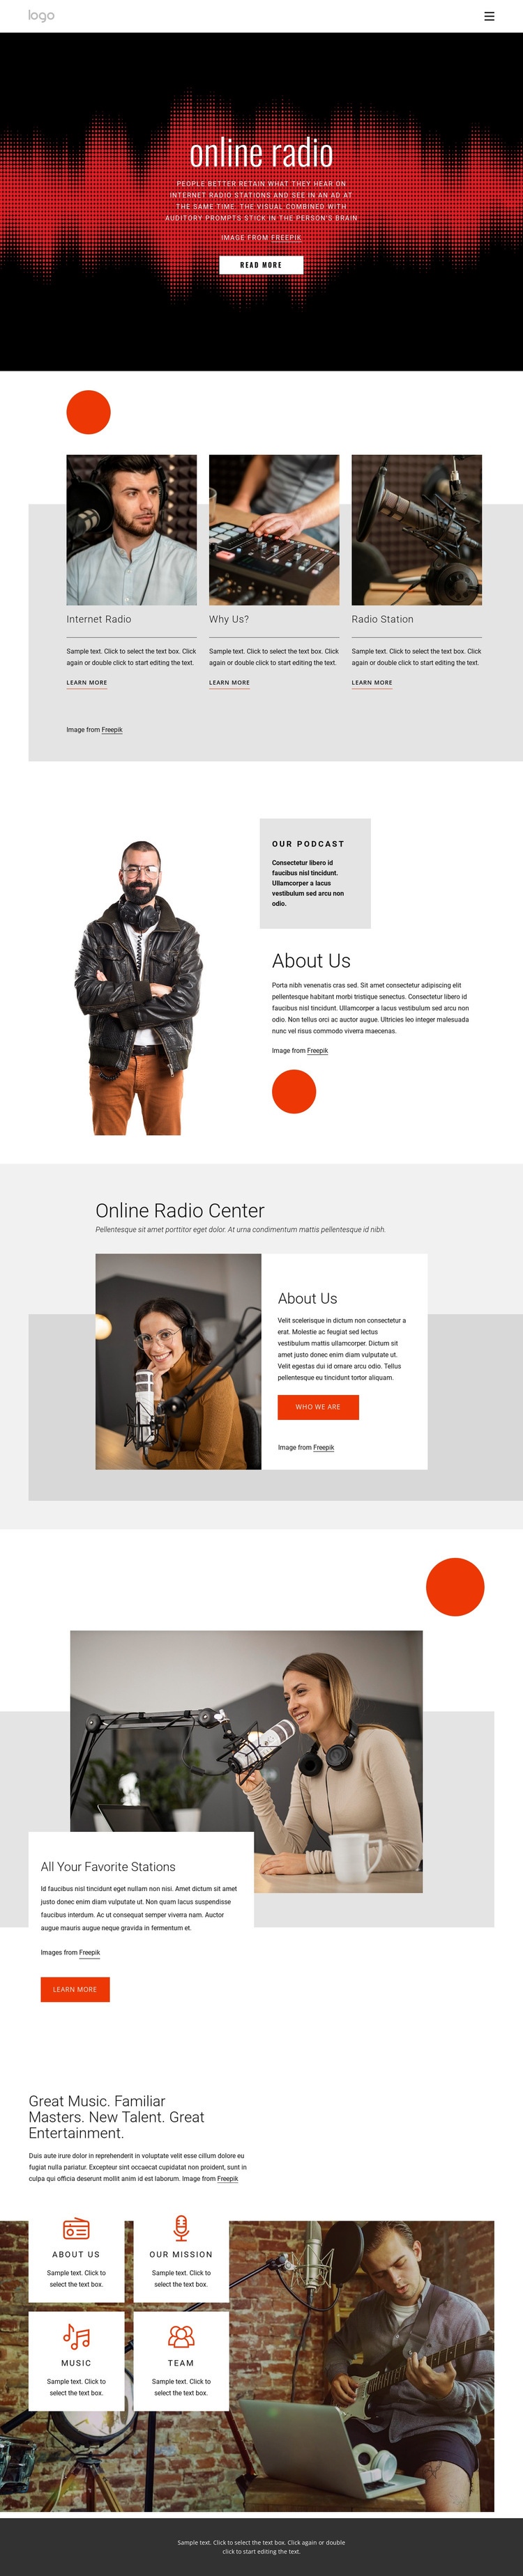 Online radio shows Webflow Template Alternative